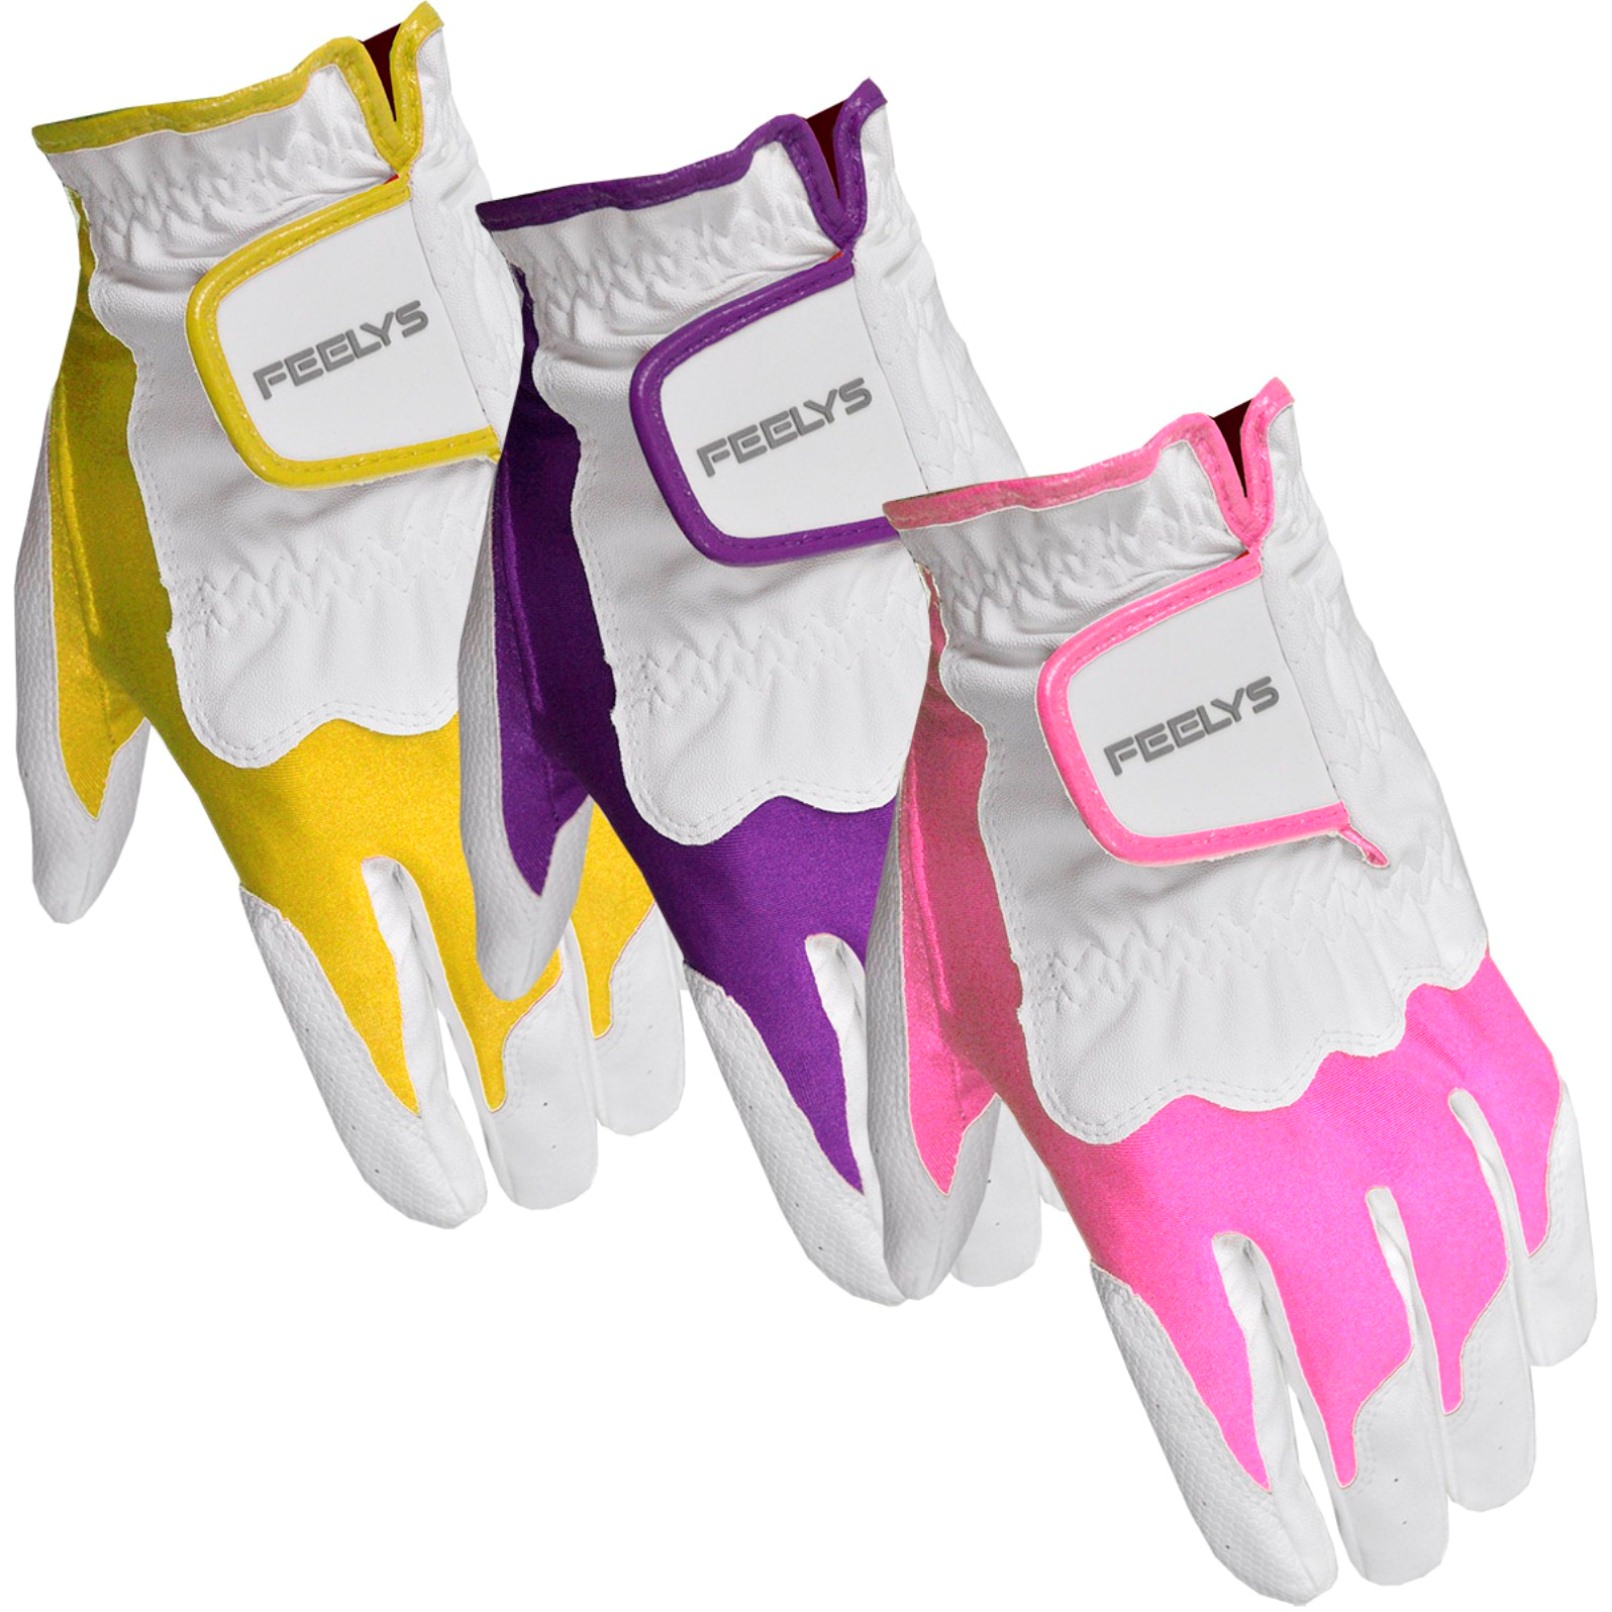 Intech Feelys Ladies LH S/M Gloves